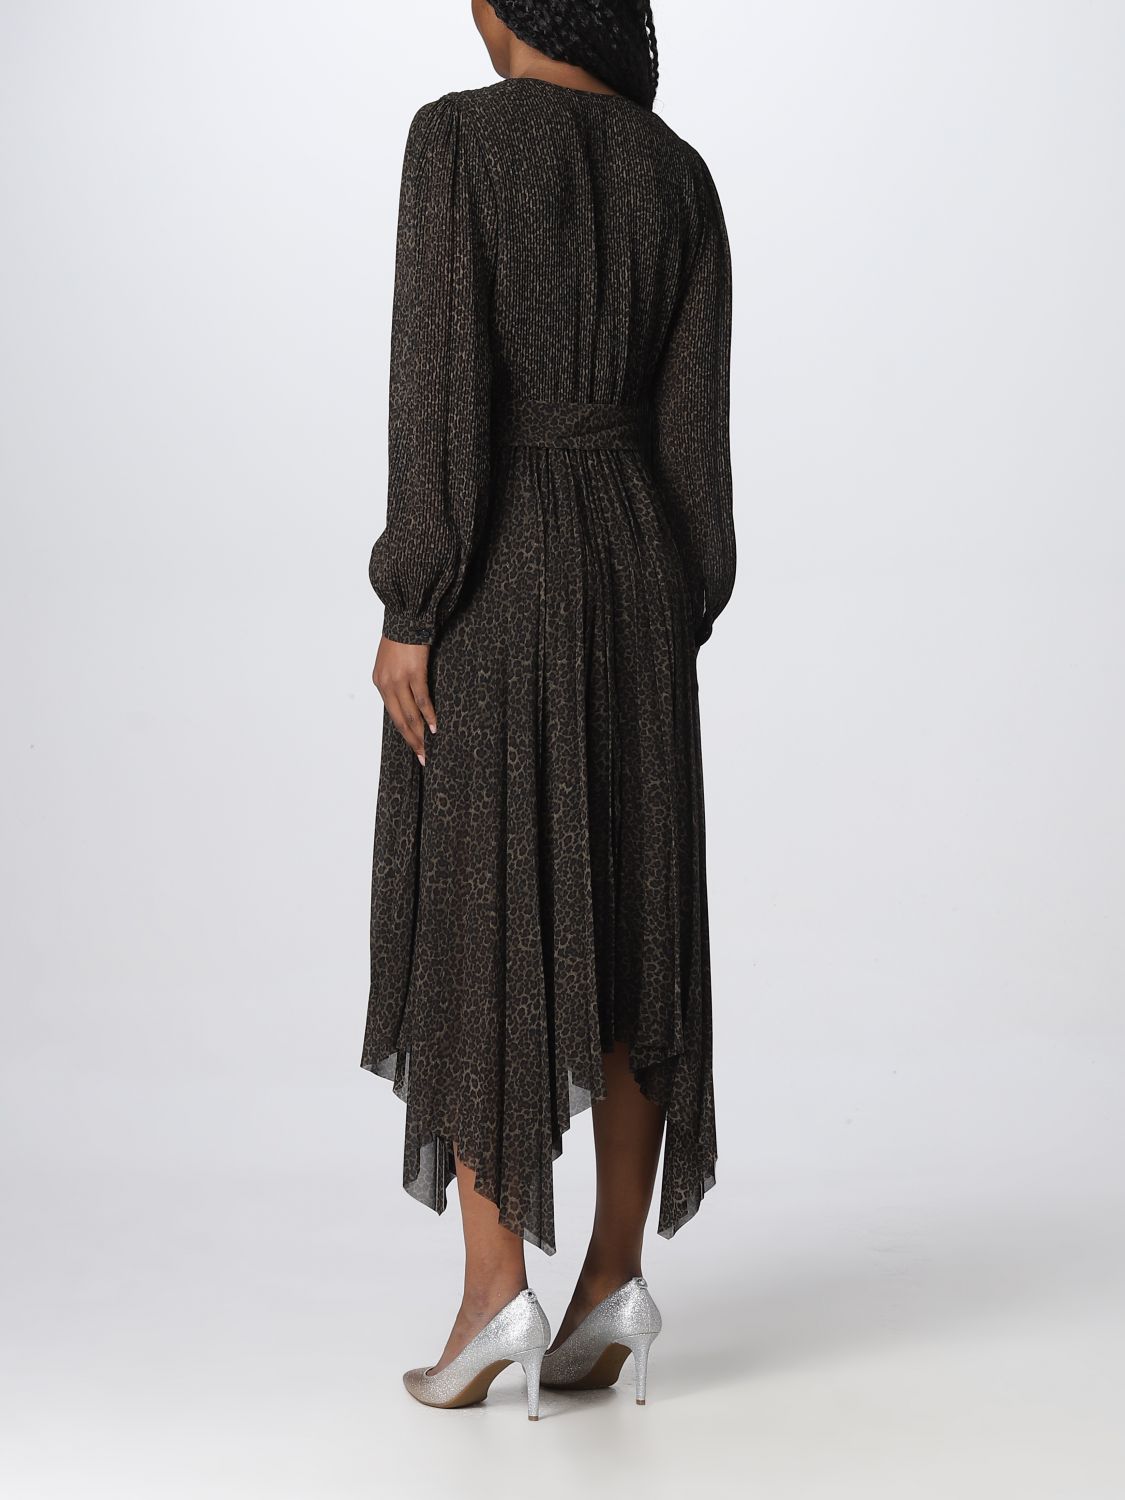 Michael Kors Outlet: dress for woman - Black | Michael Kors dress  MF2819O6S2 online on 